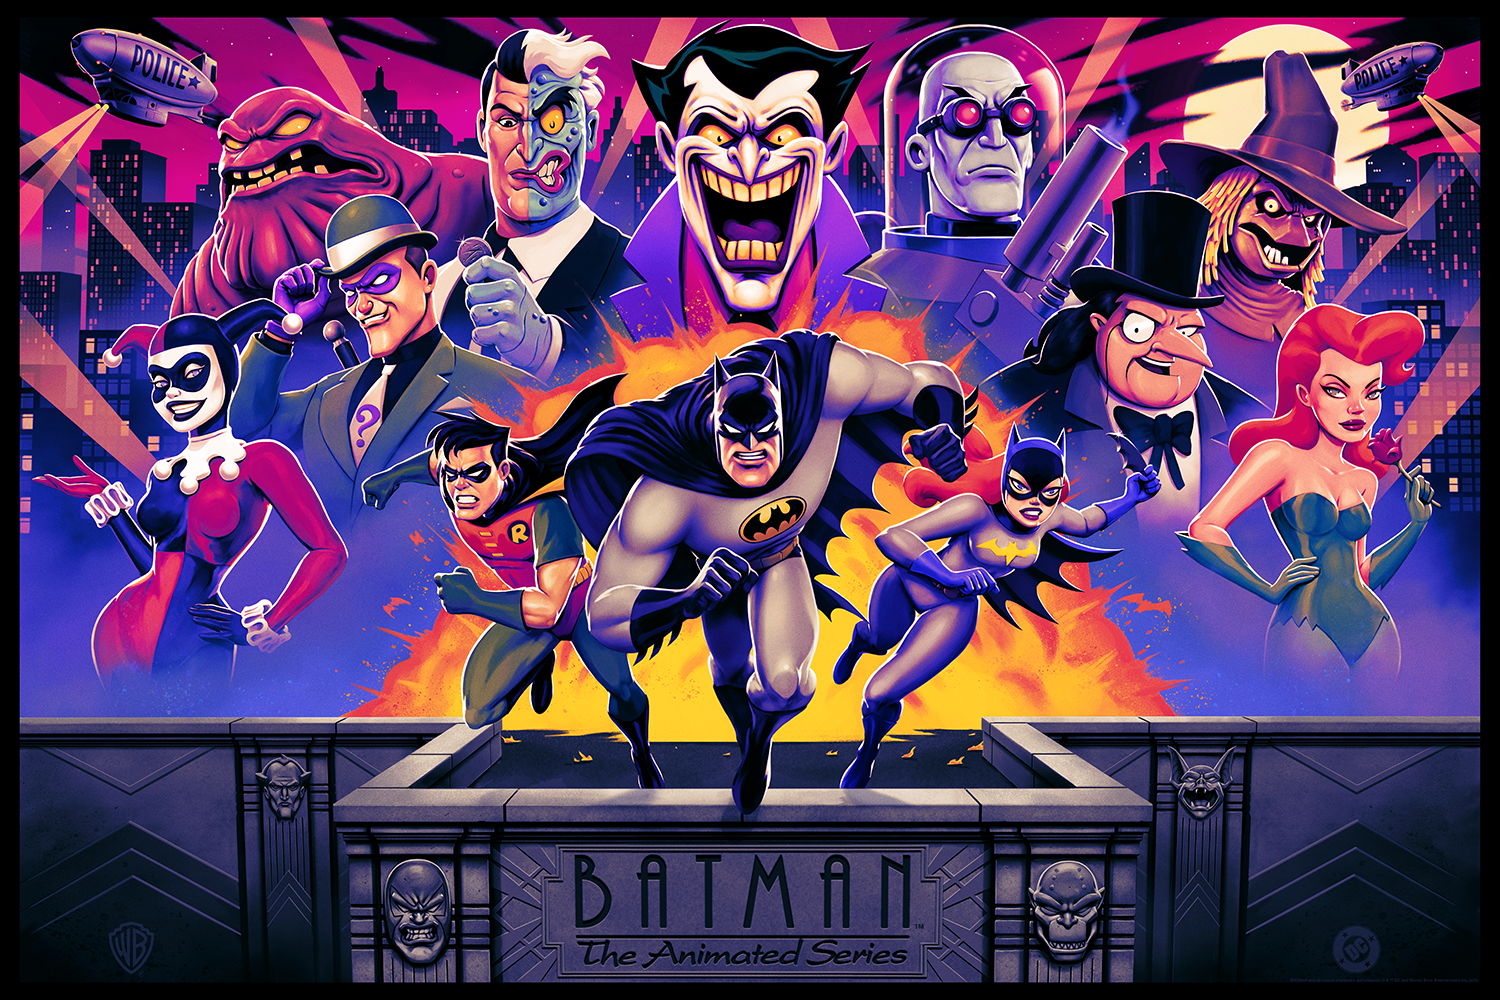 batman the animated series villains